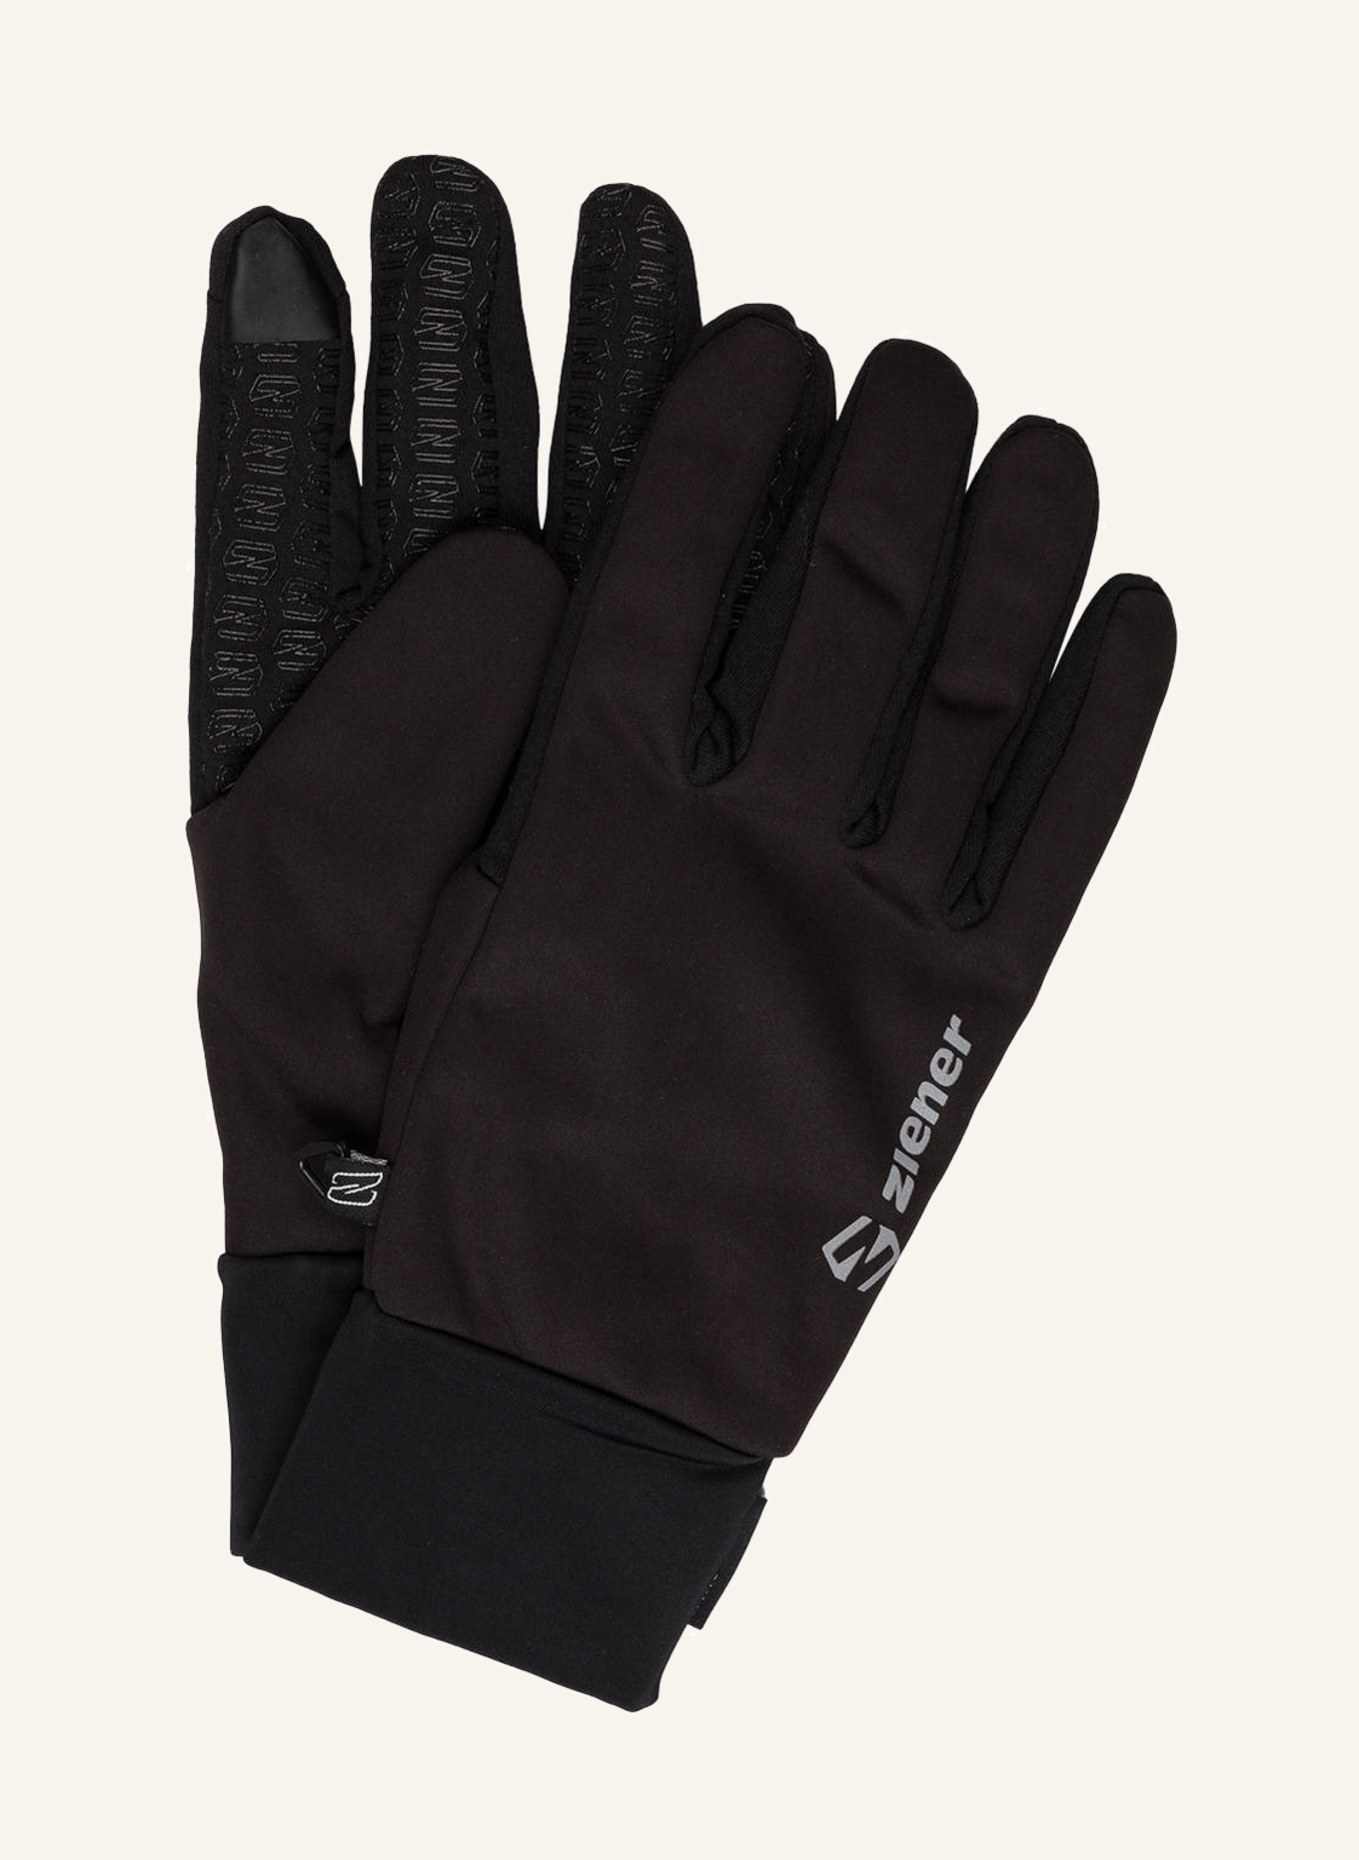 ziener Multisport-Handschuhe IVIDURO in TOUCH schwarz